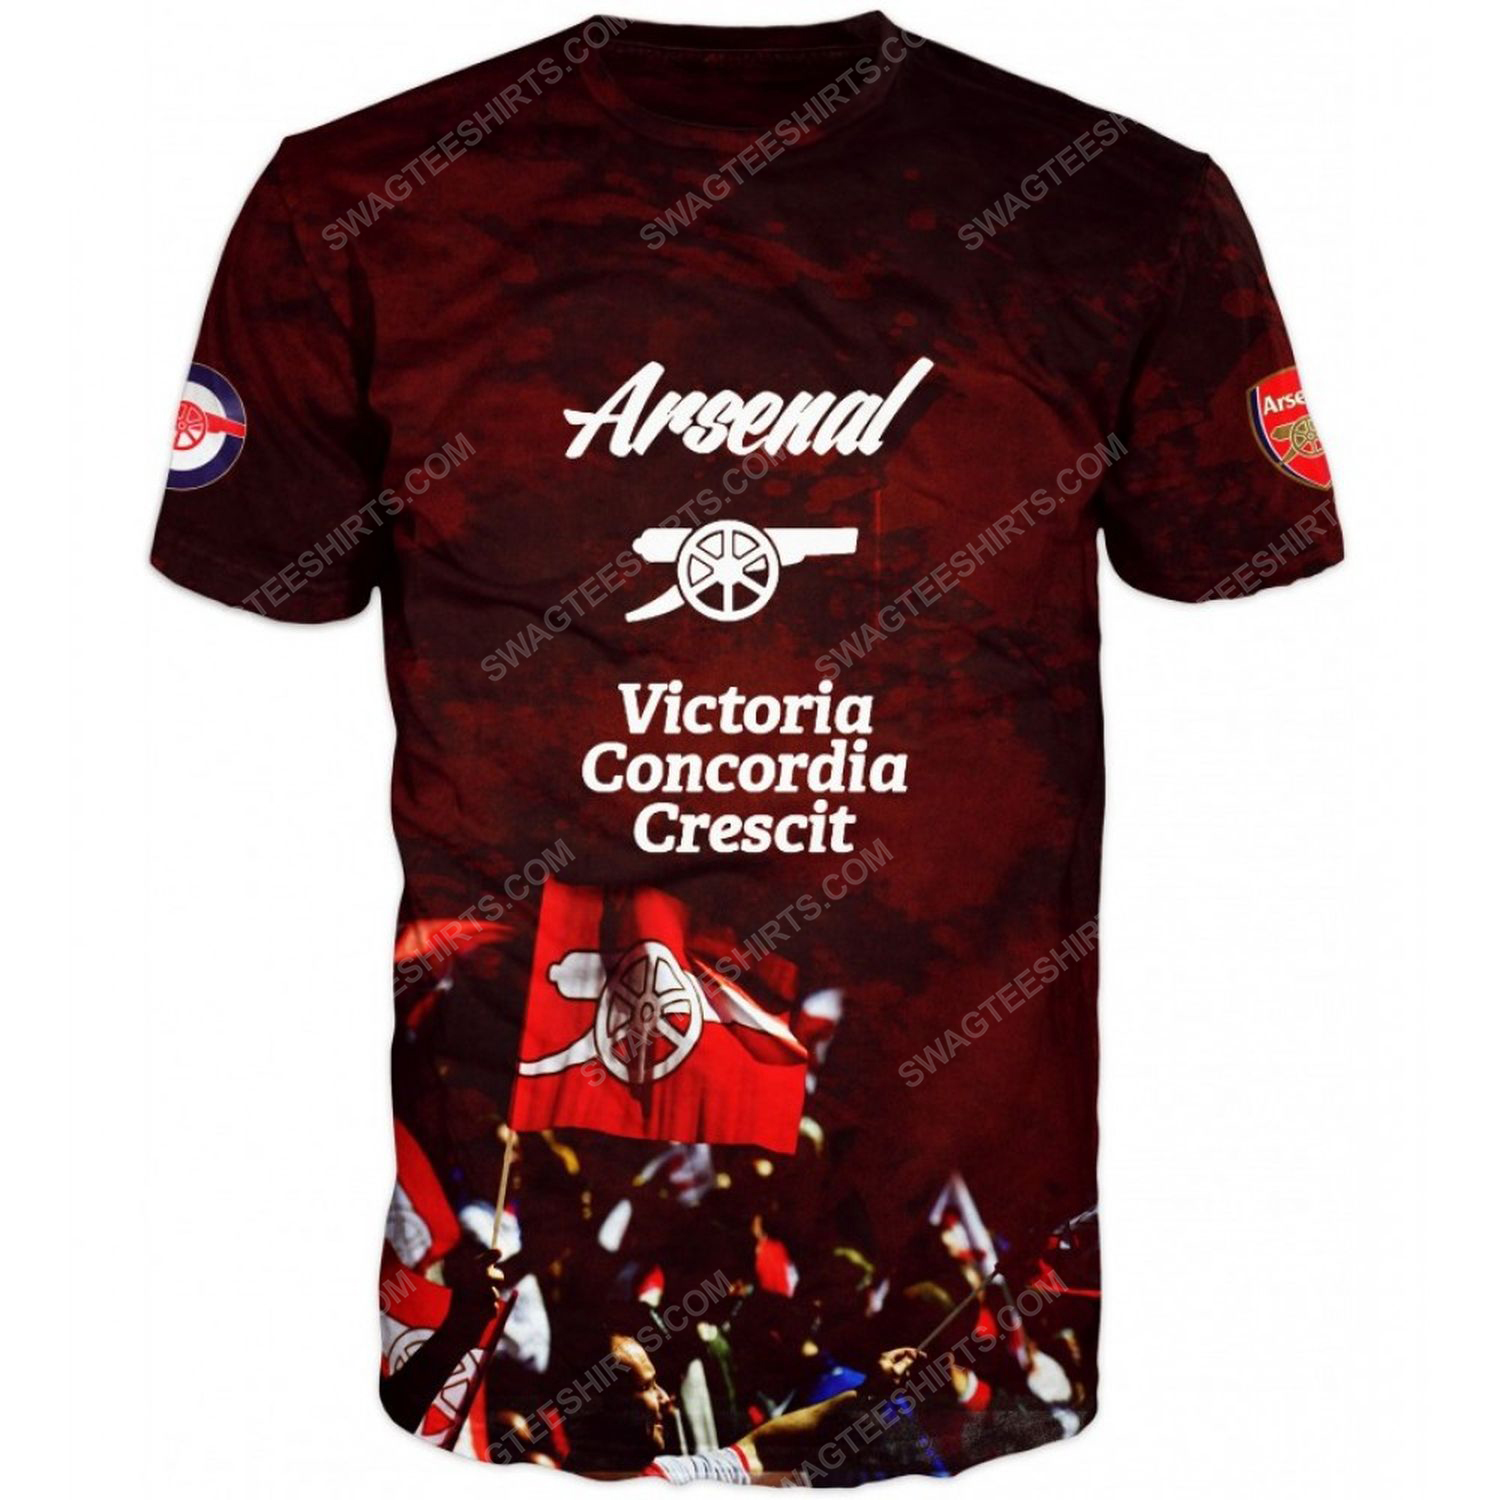 Arsenal victoria concordia crescit full printing shirt - front